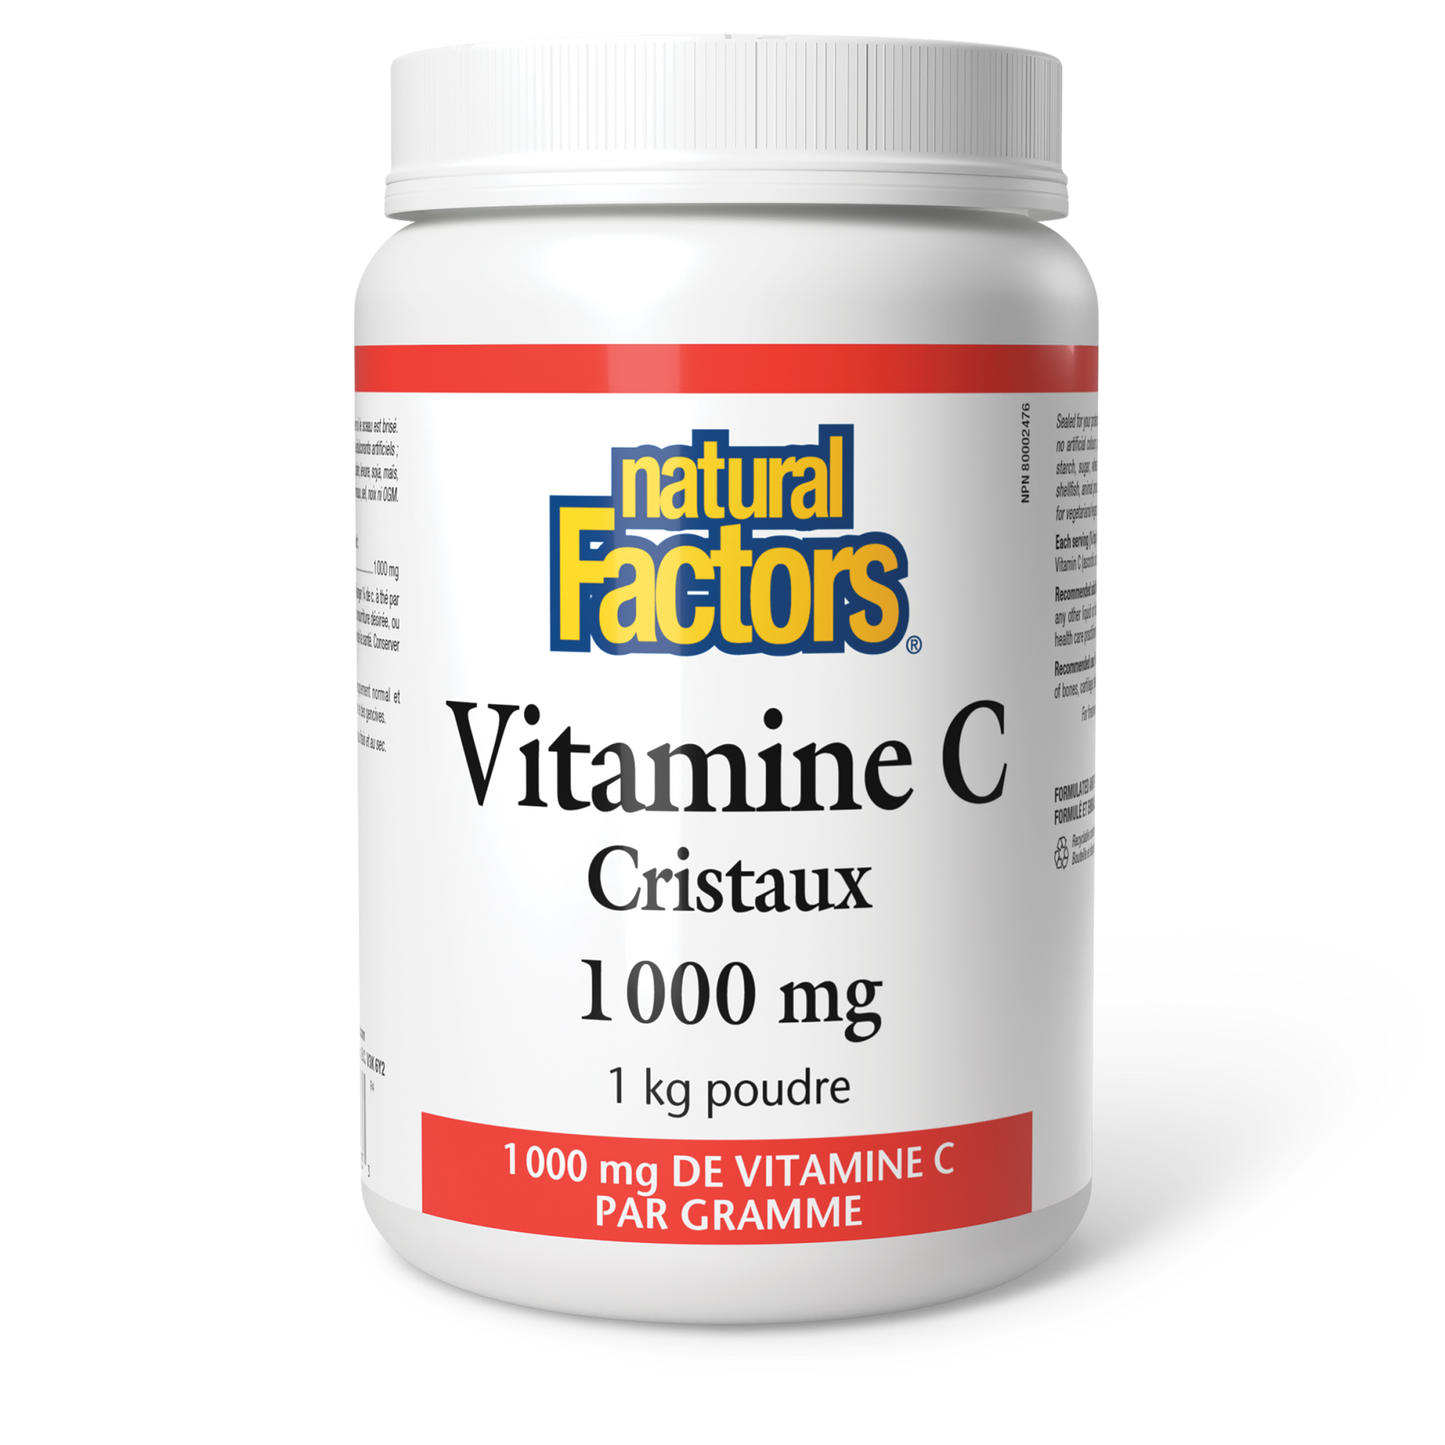 Vitamine C Cristaux 1 000 mg, Natural Factors|v|image|1363